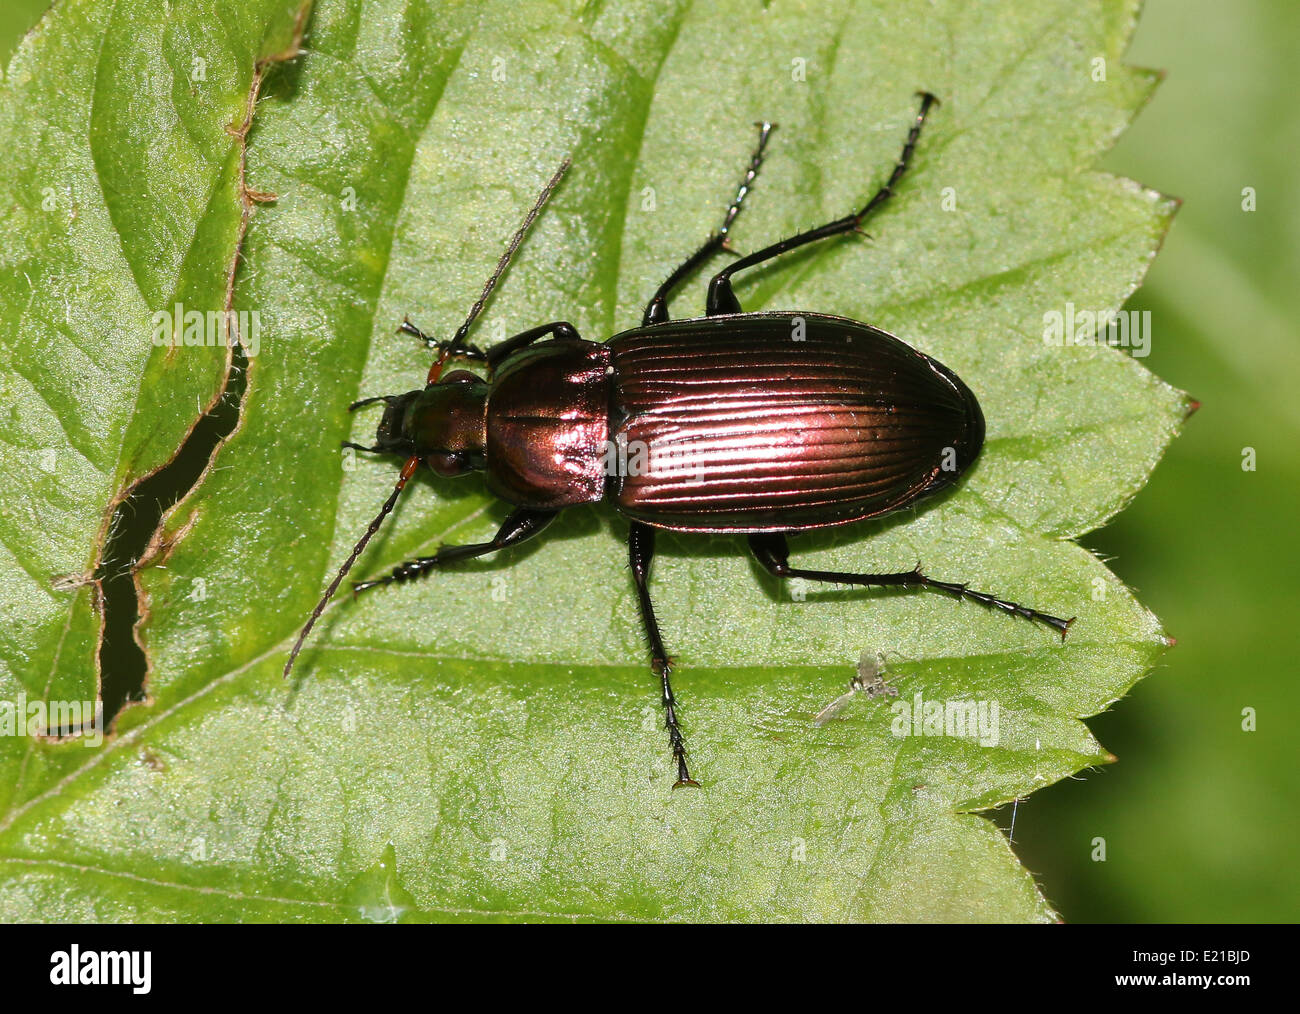 Poecilus cupreus, a  lareg copper-coloured Ground beetle posing on a leaf Stock Photo